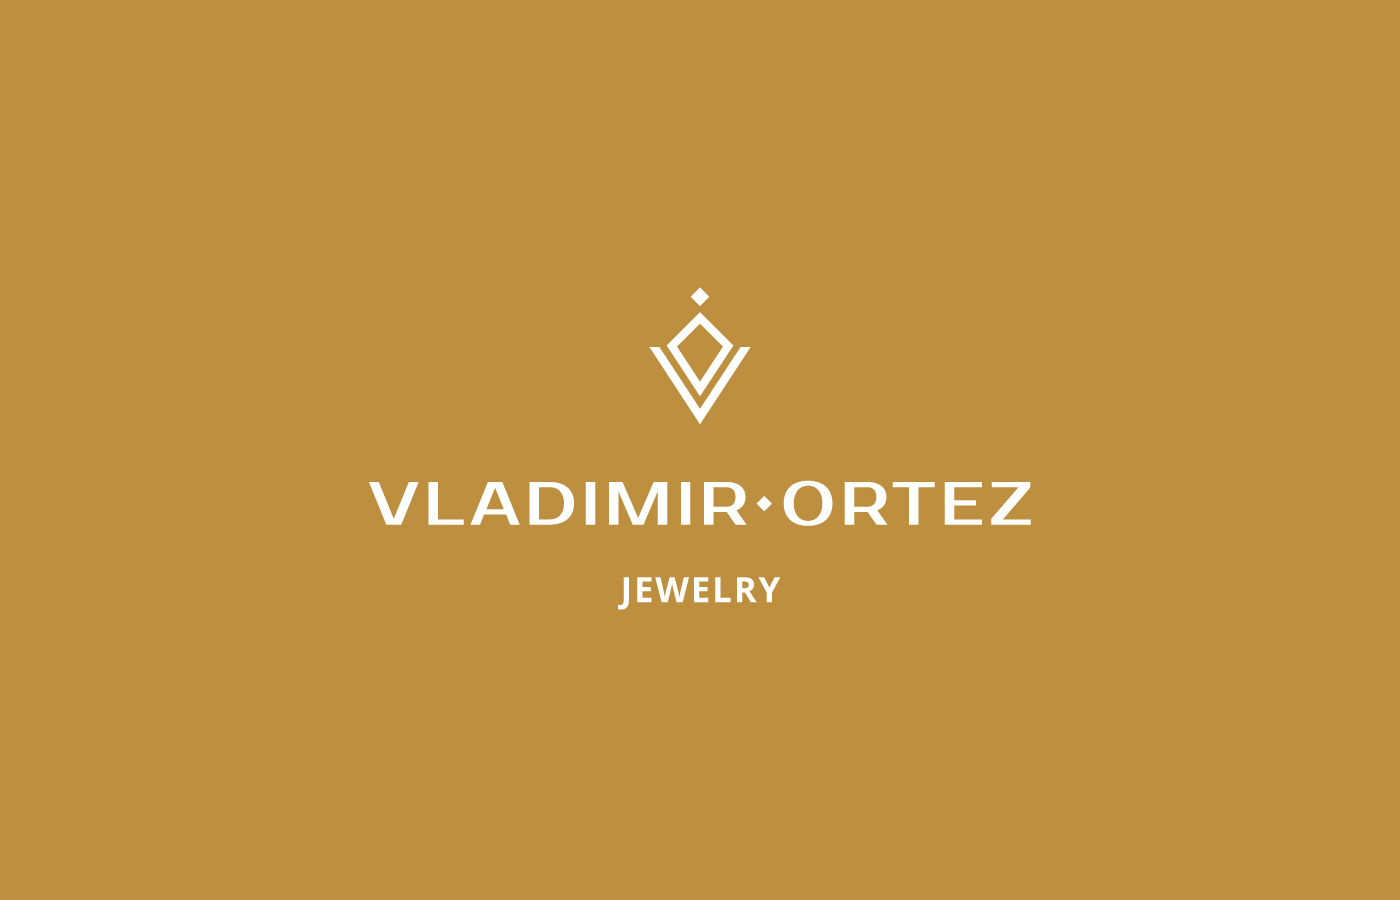 Logotype jewelry vladimir ortez minimalistic Minimalism logodesign logo brand brands brand identity pedro almeida pedro brands visual identity jewelry store